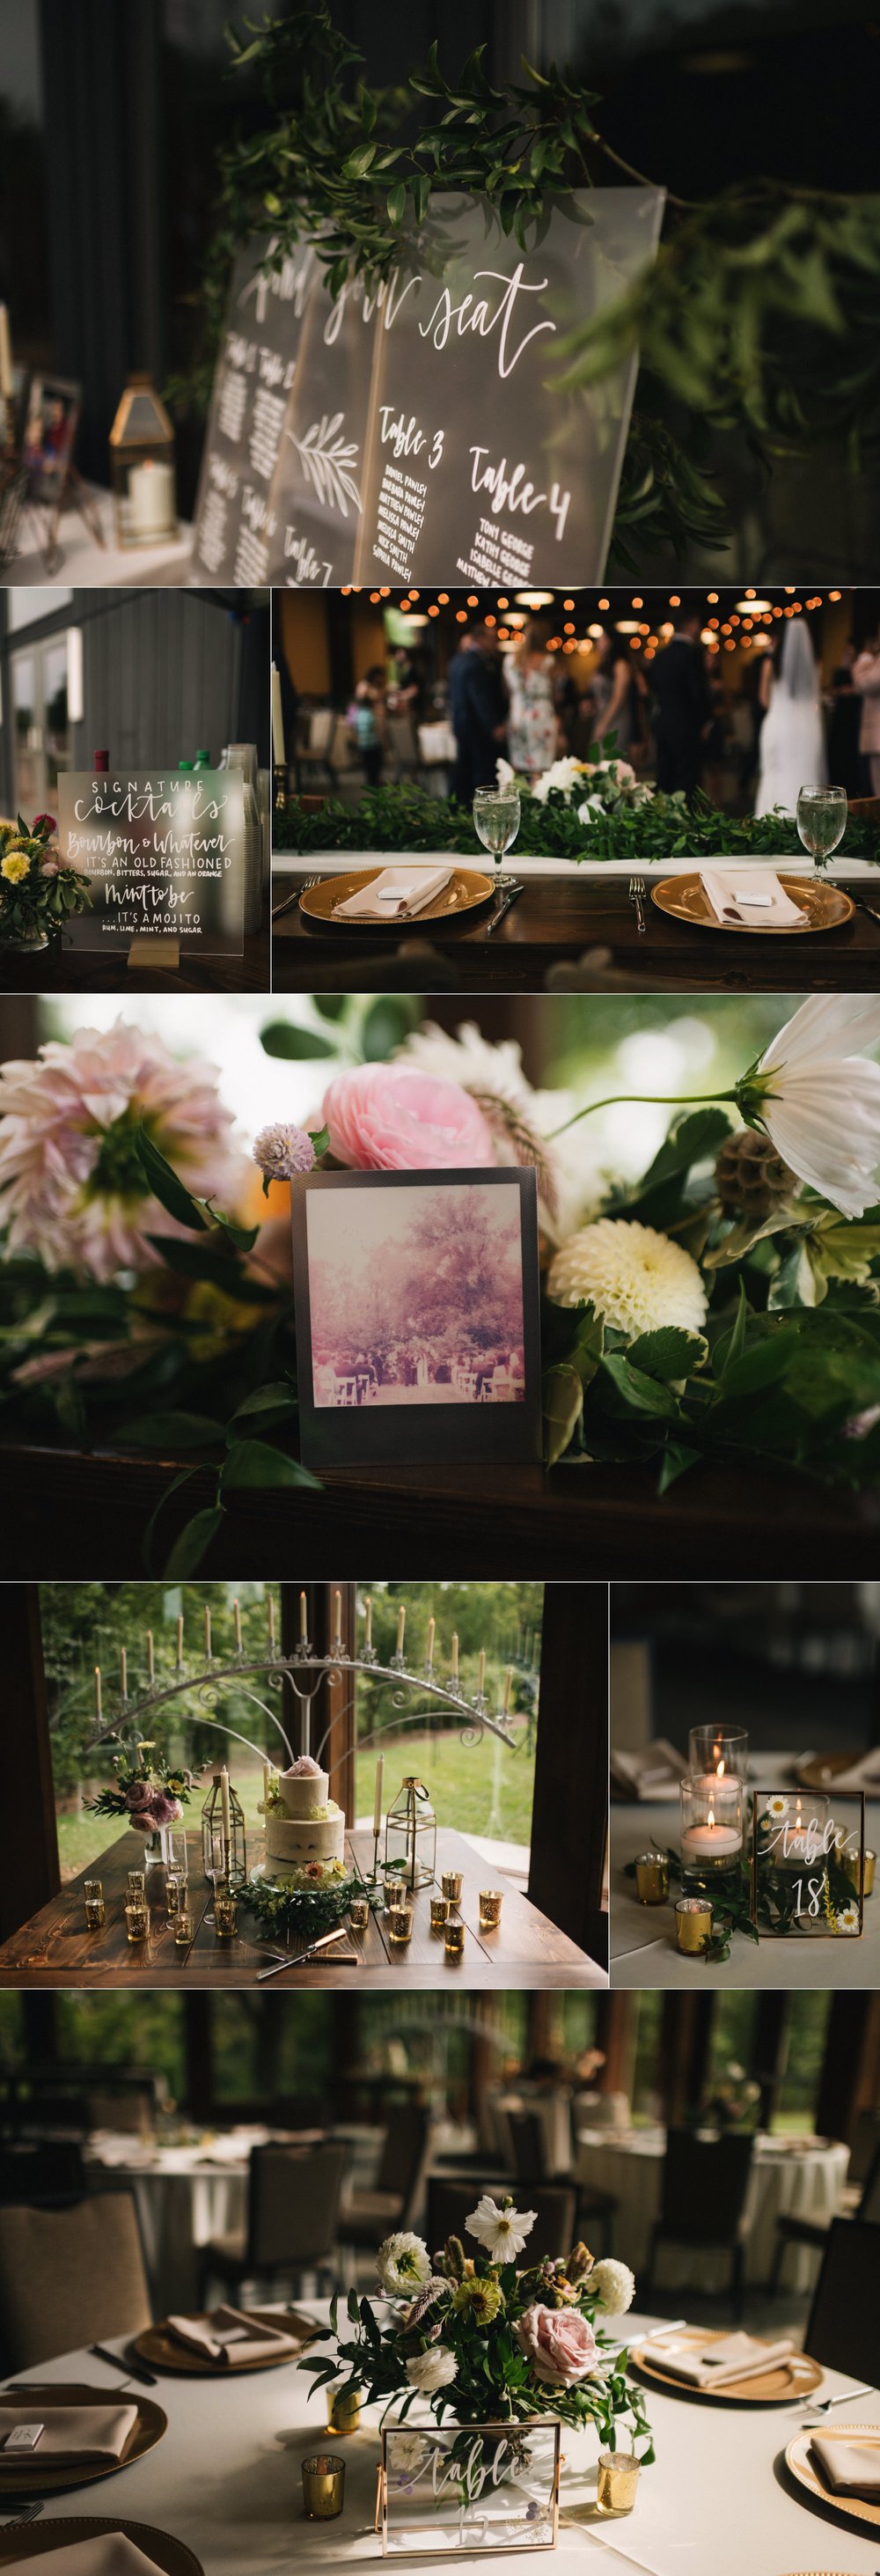 Gheens-Foundation-Lodge-Romantic-Garden-Wedding-By-Louisville-Kentucky-Wedding-Photographer-Sarah-Katherine-Davis-Photography-reception.jpg